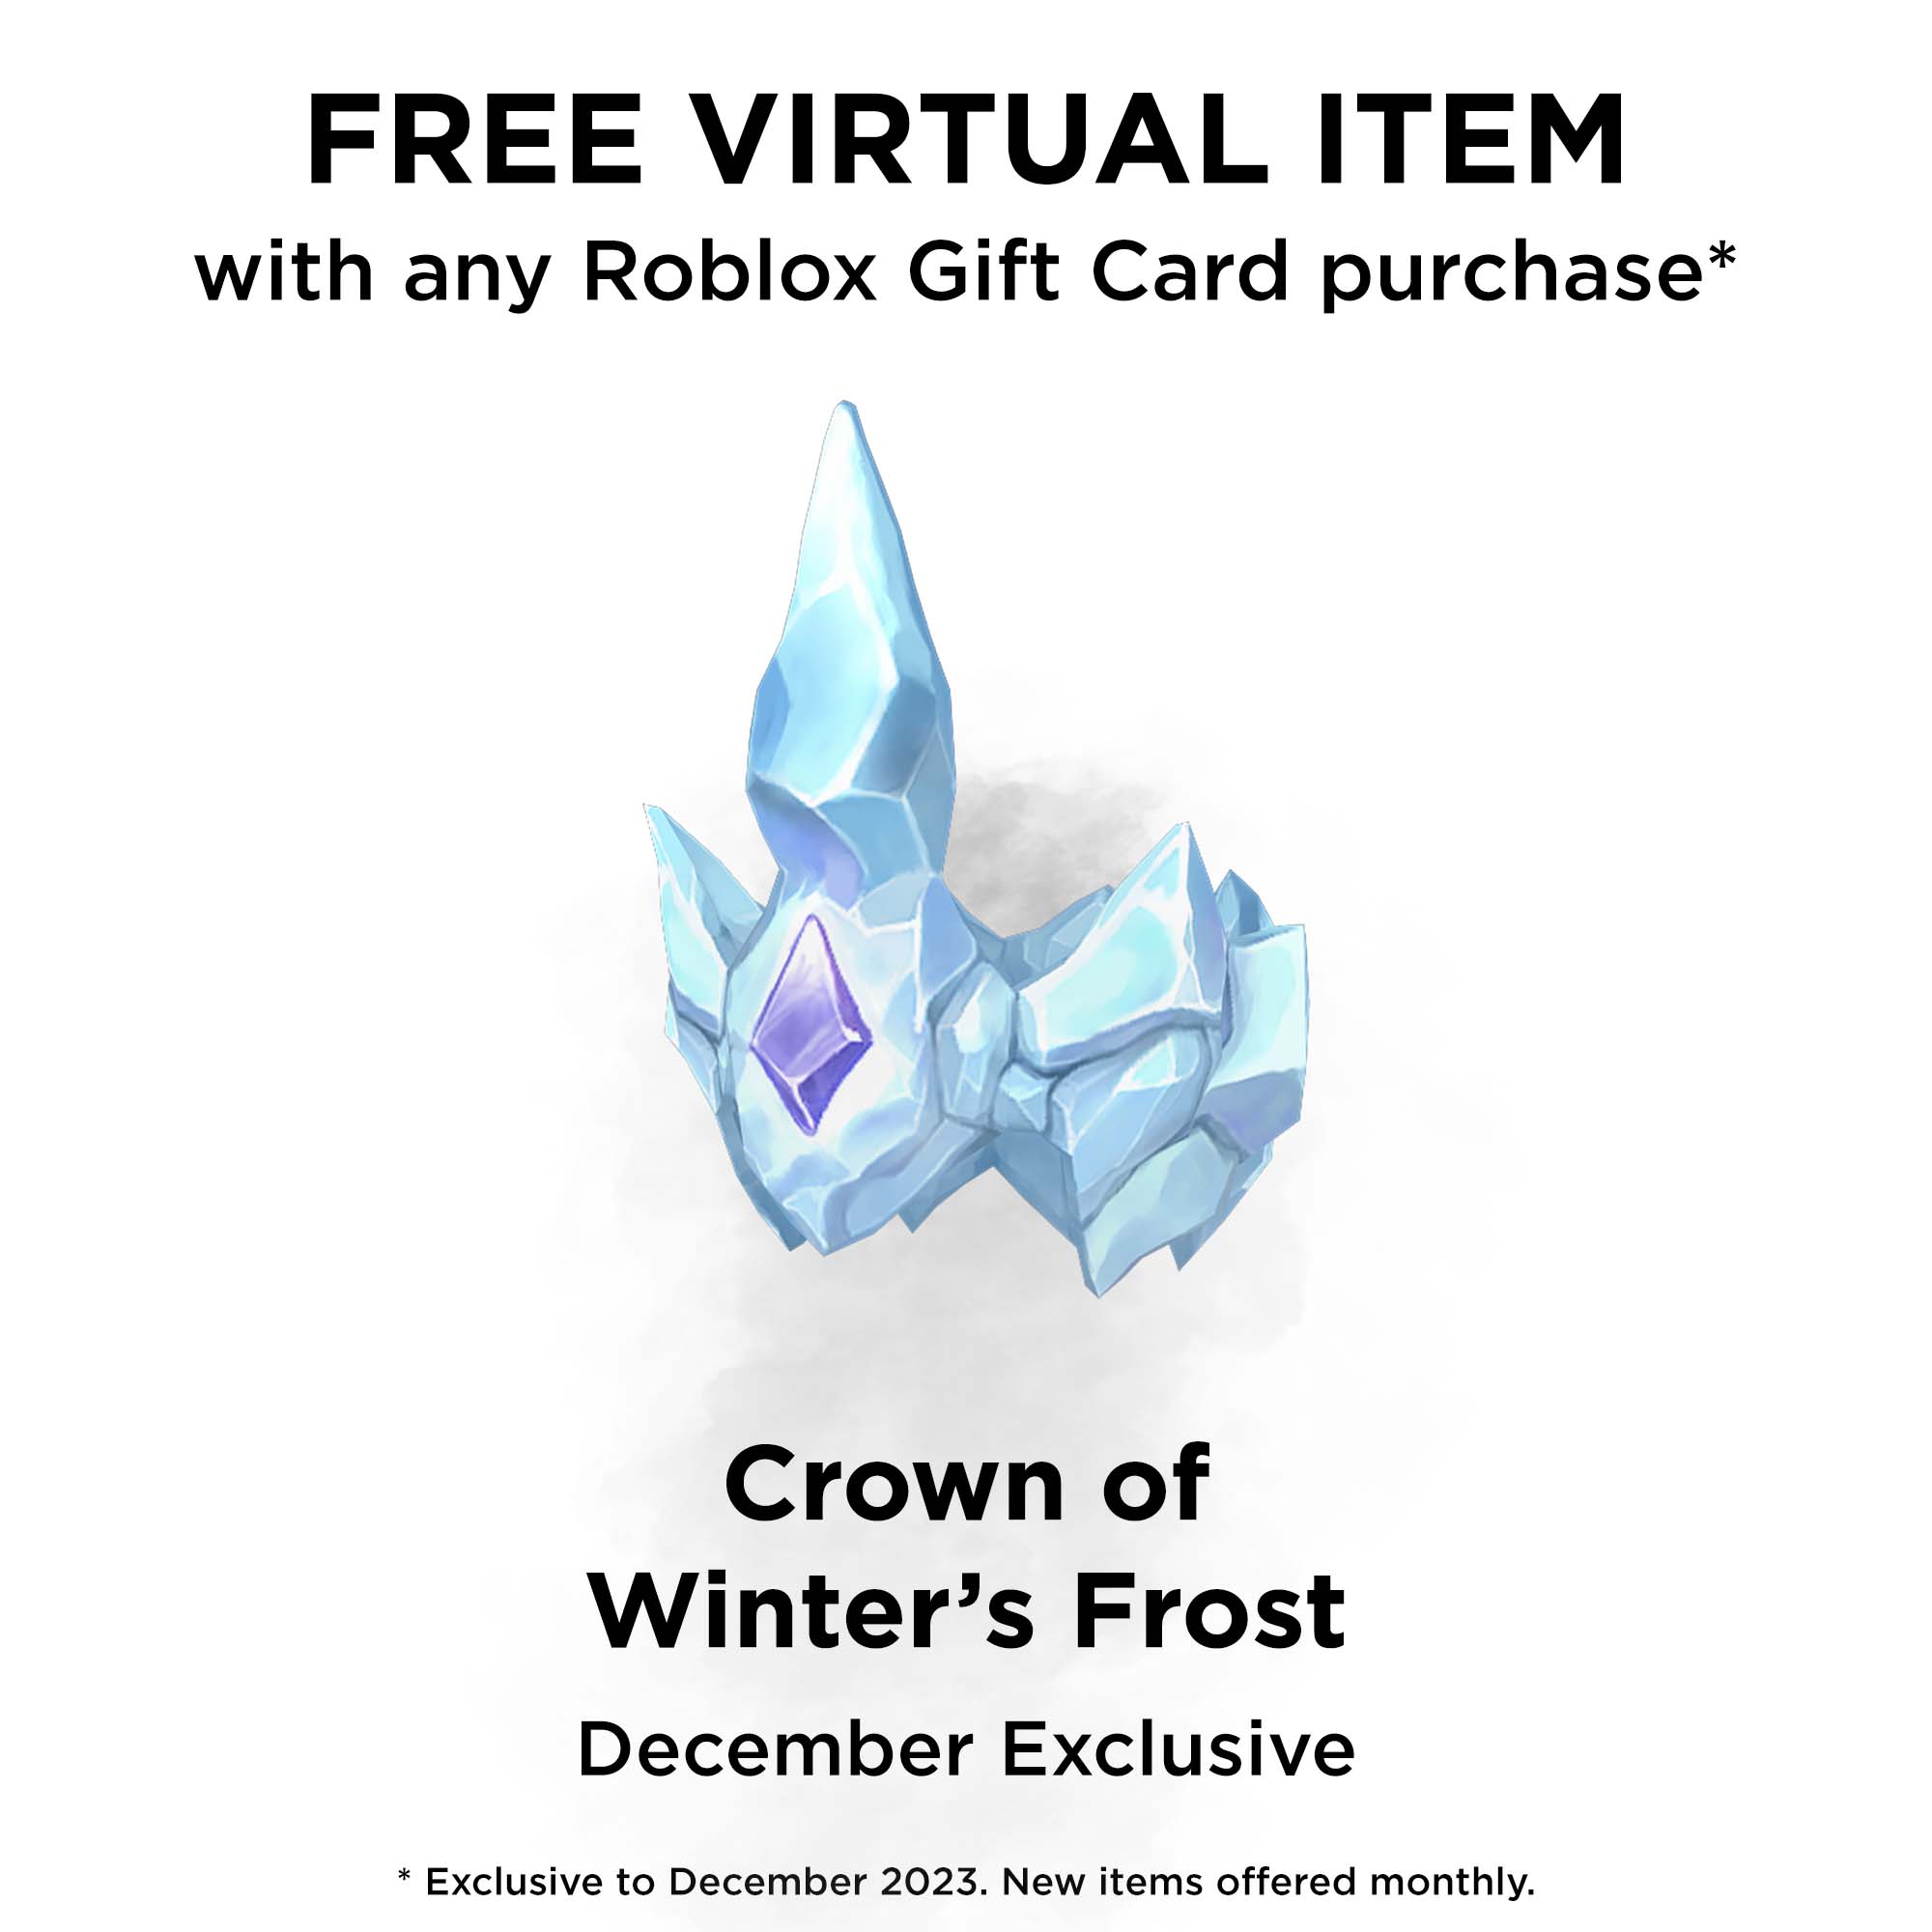 Roblox $30 Gift Card - [Digital] + Exclusive Virtual Item